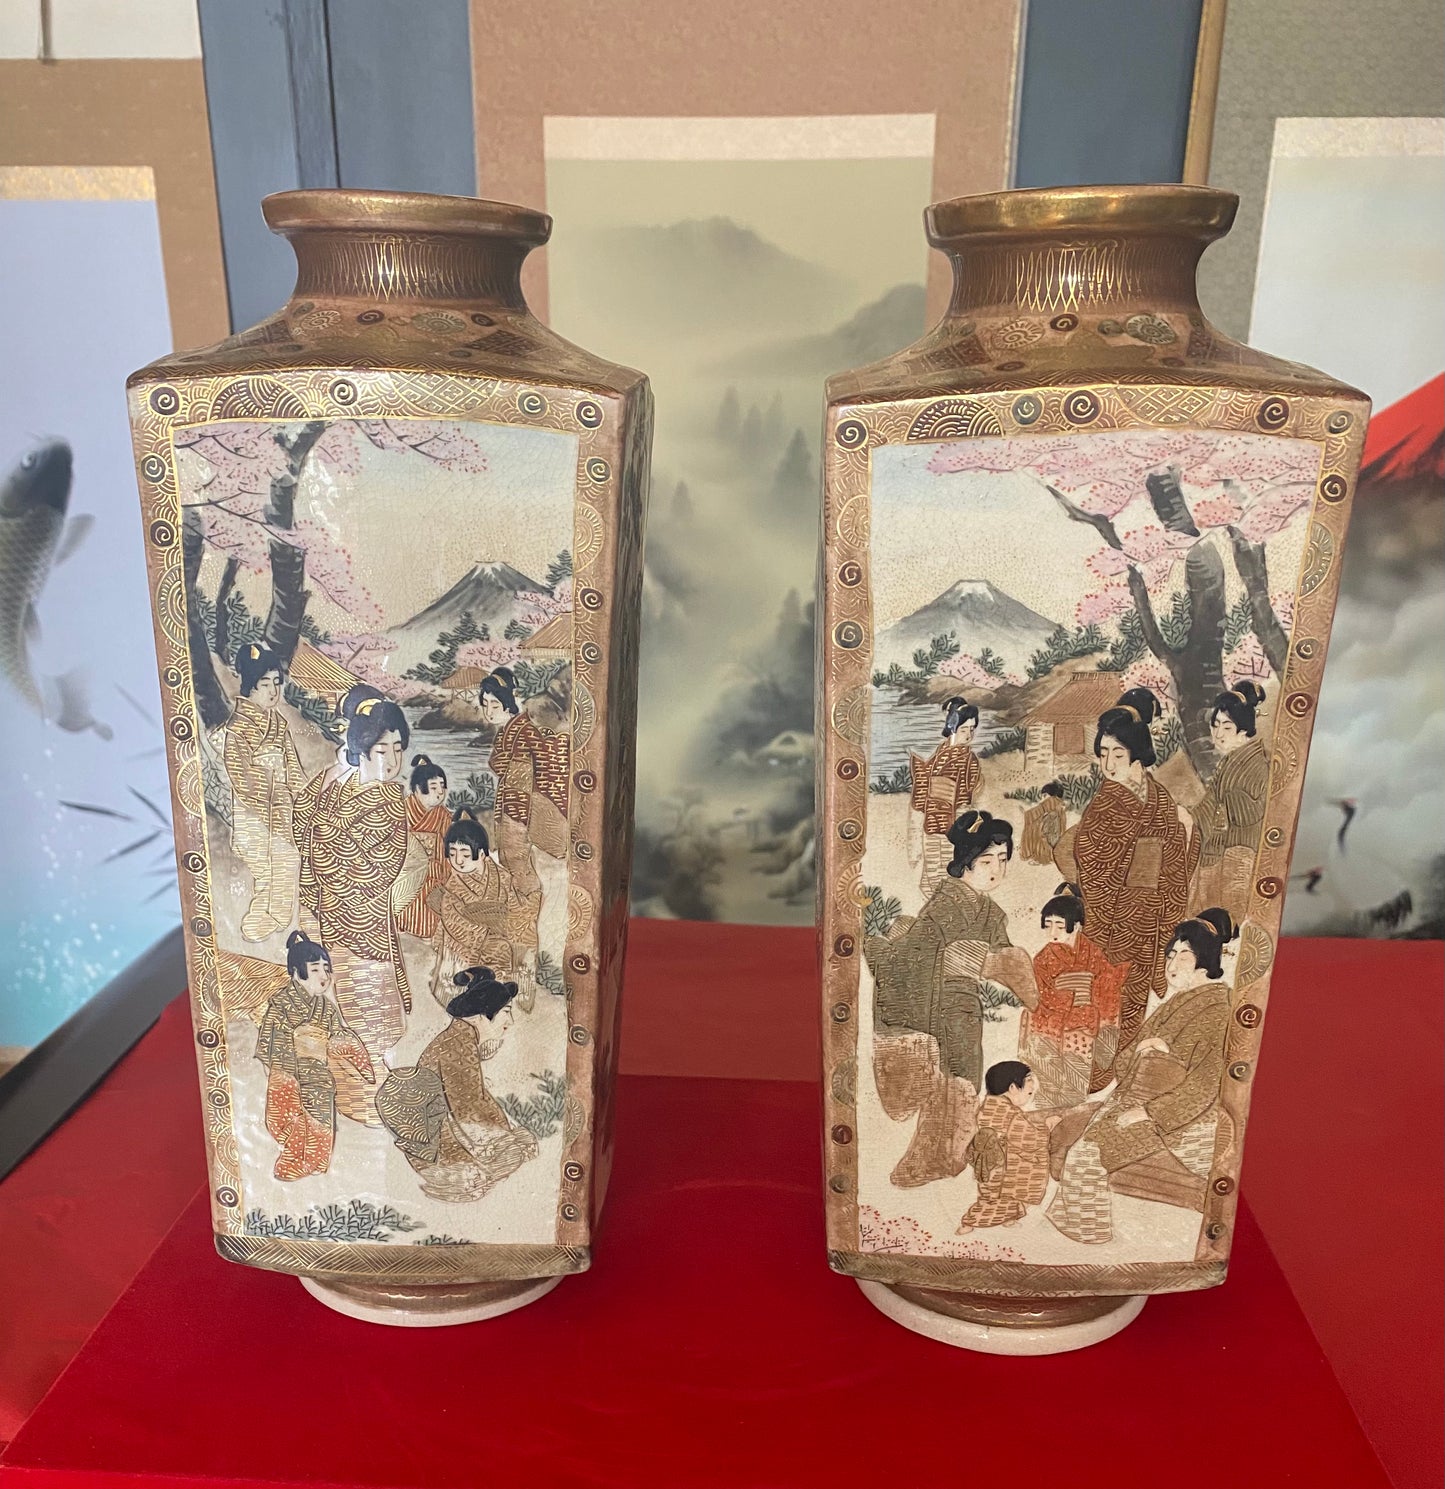 Japanese Pair of Satsuma Vases